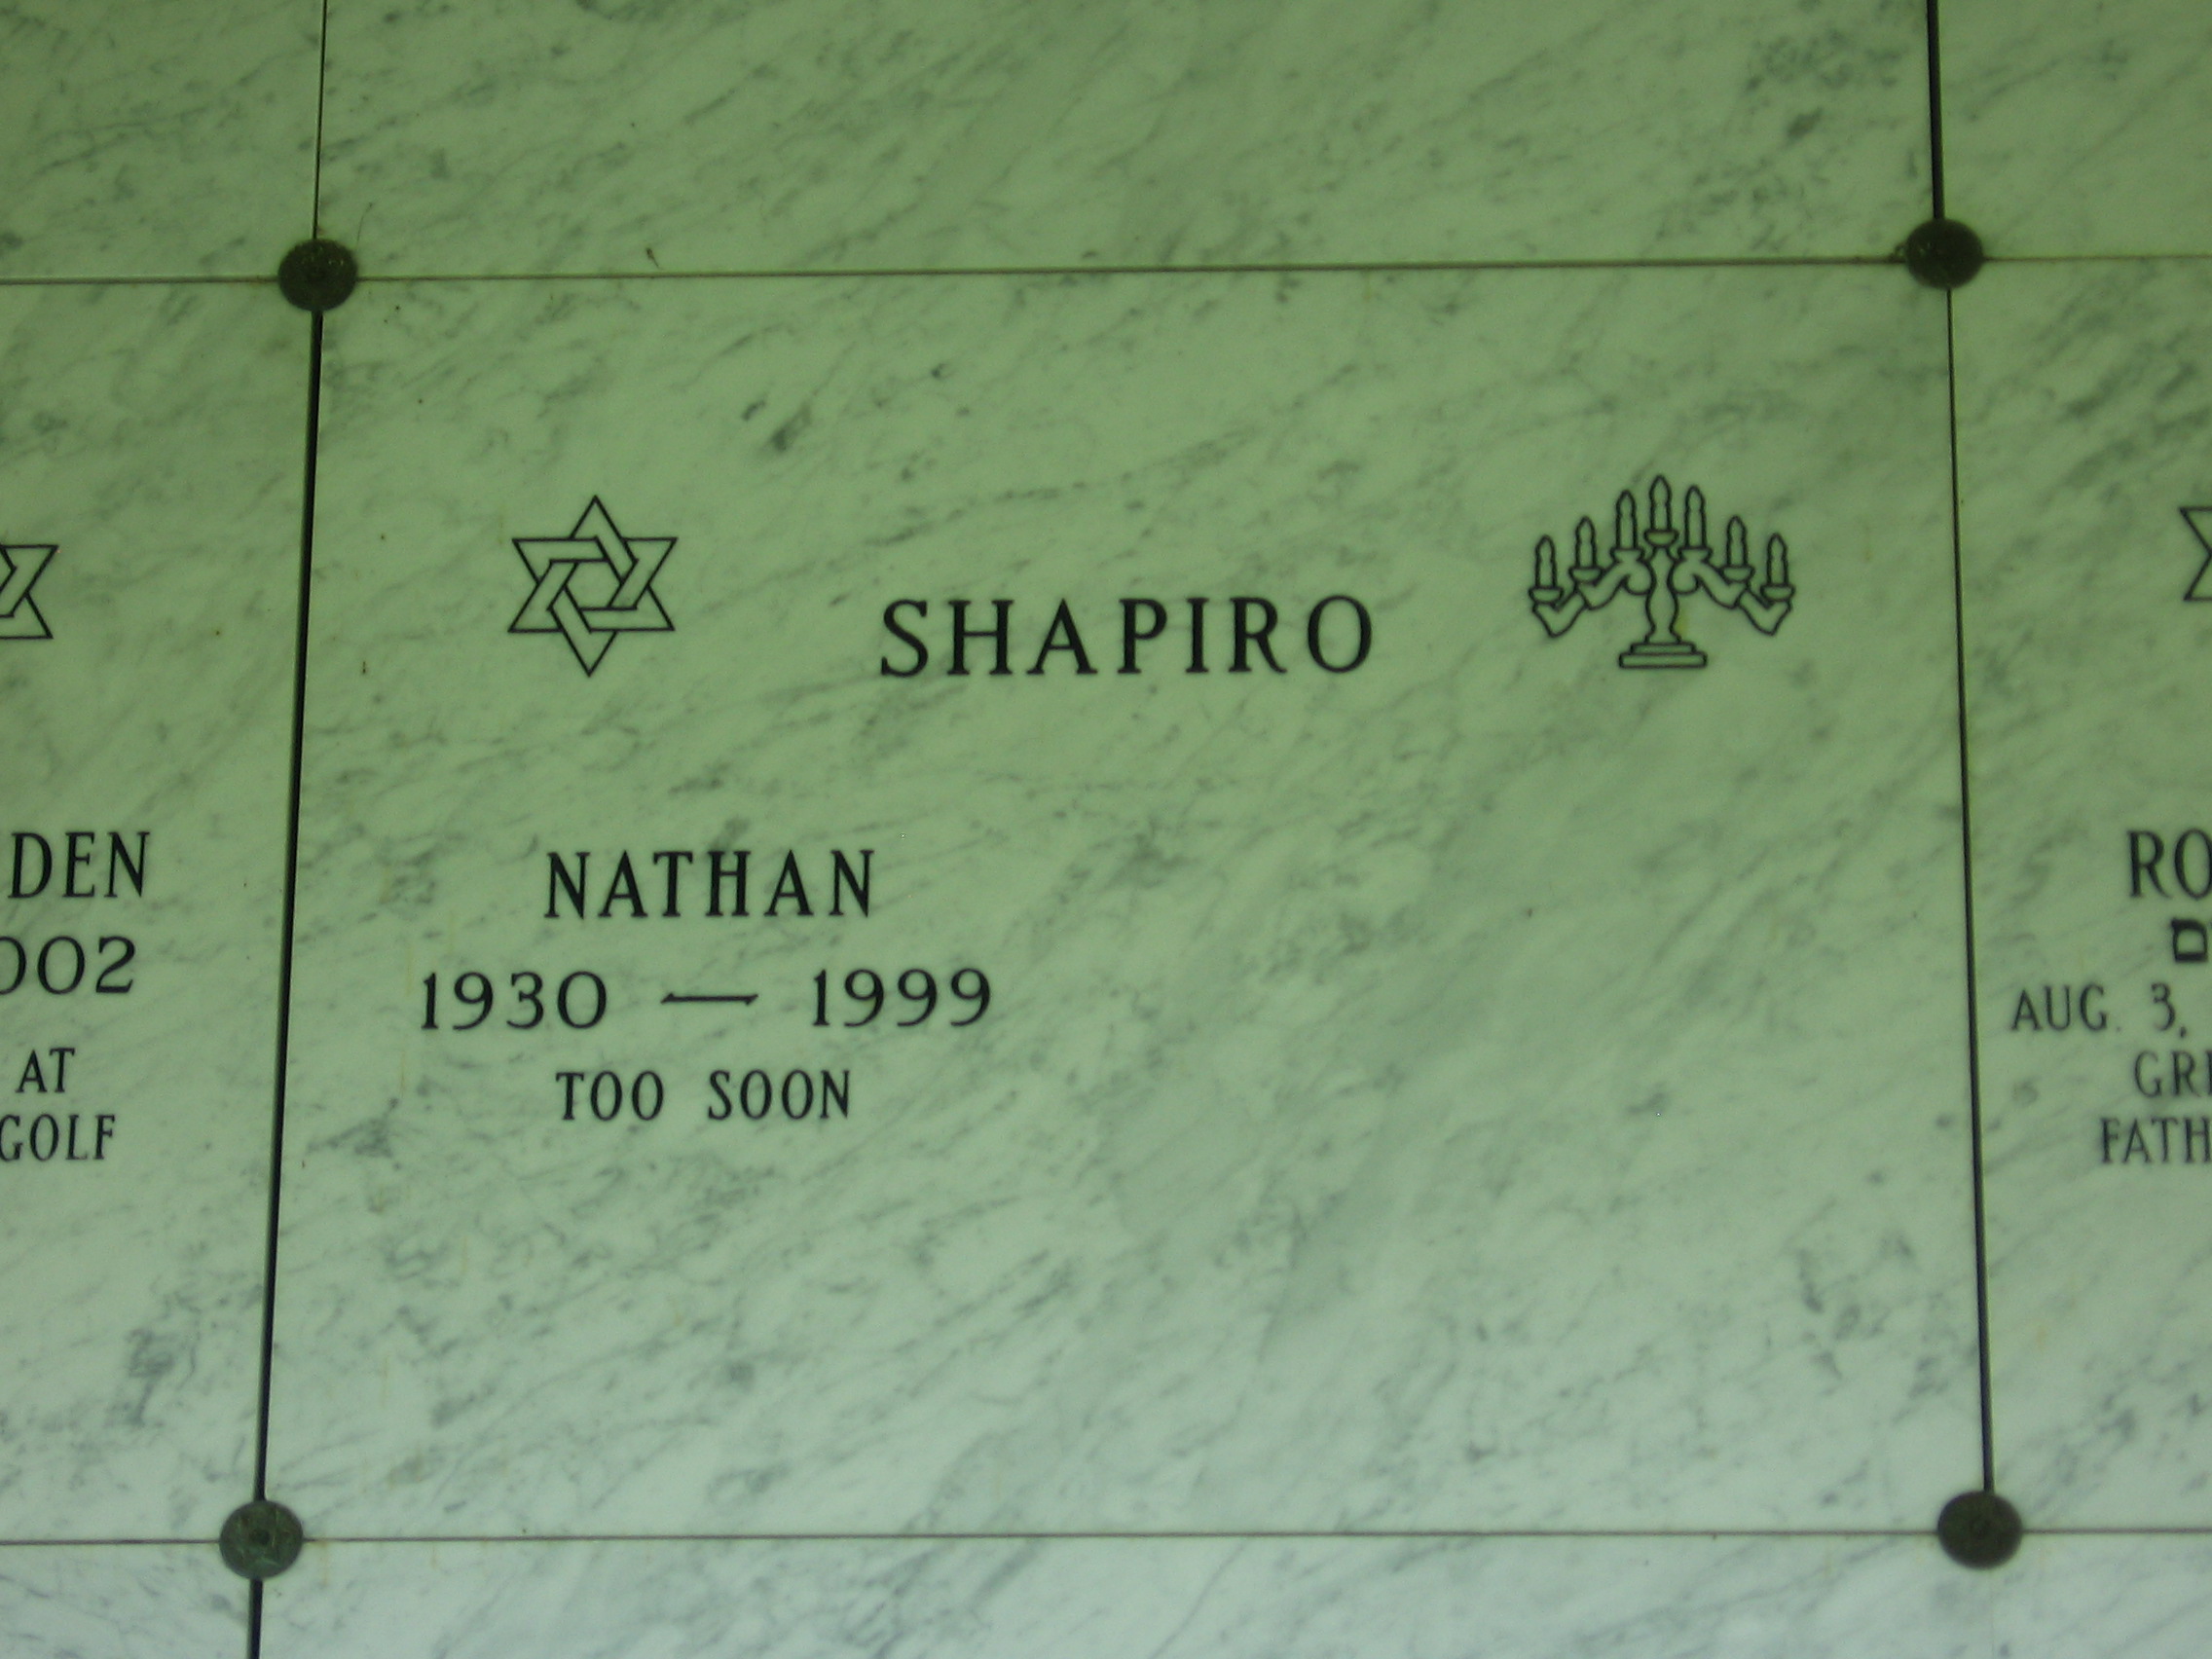 Nathan Shapiro